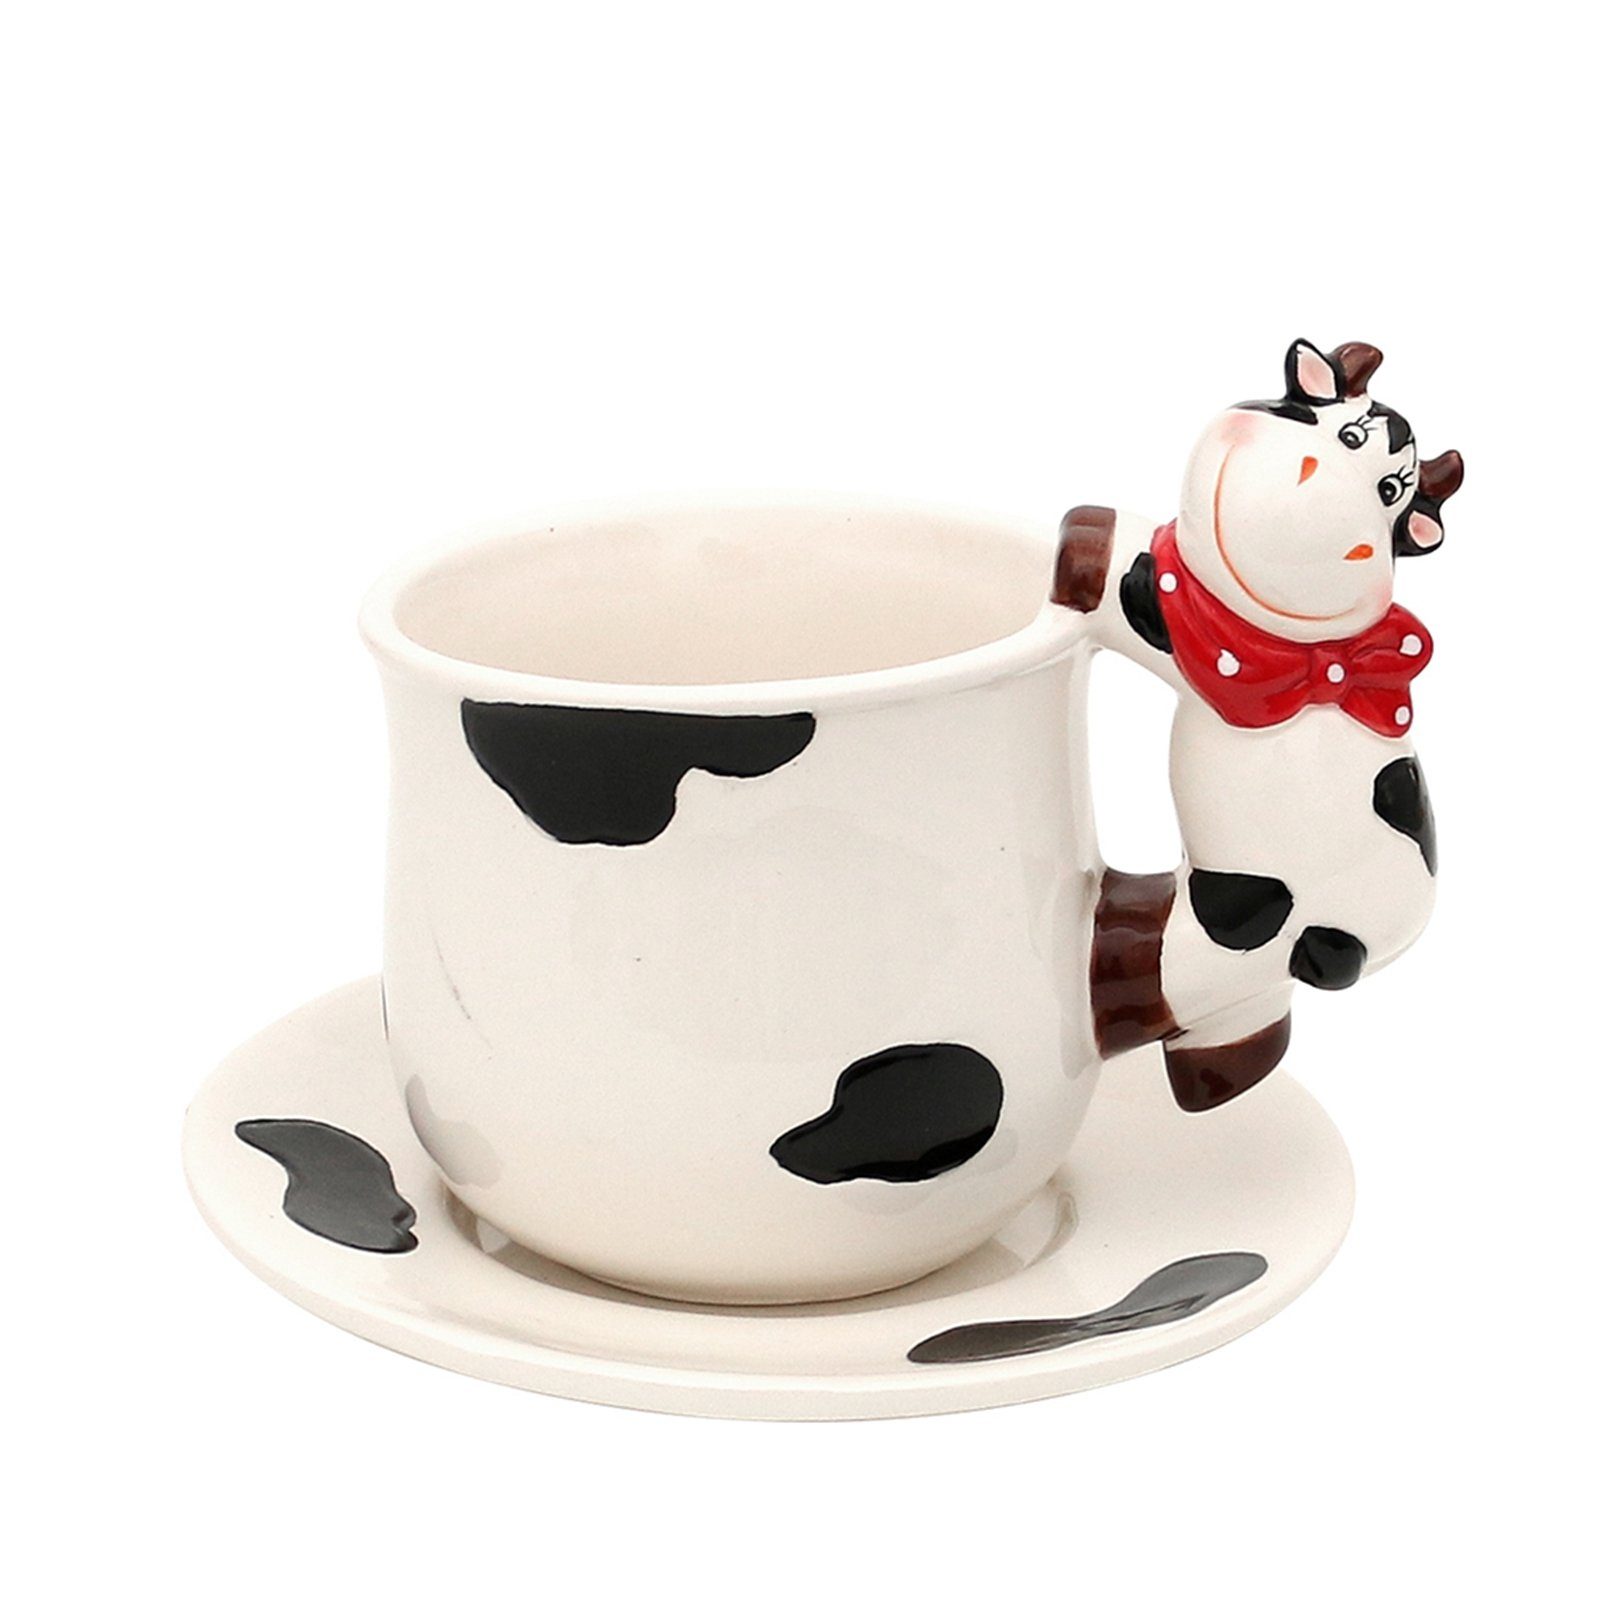 Tasse mit Kuh, Tasse Neuetischkultur Keramik Unterteller